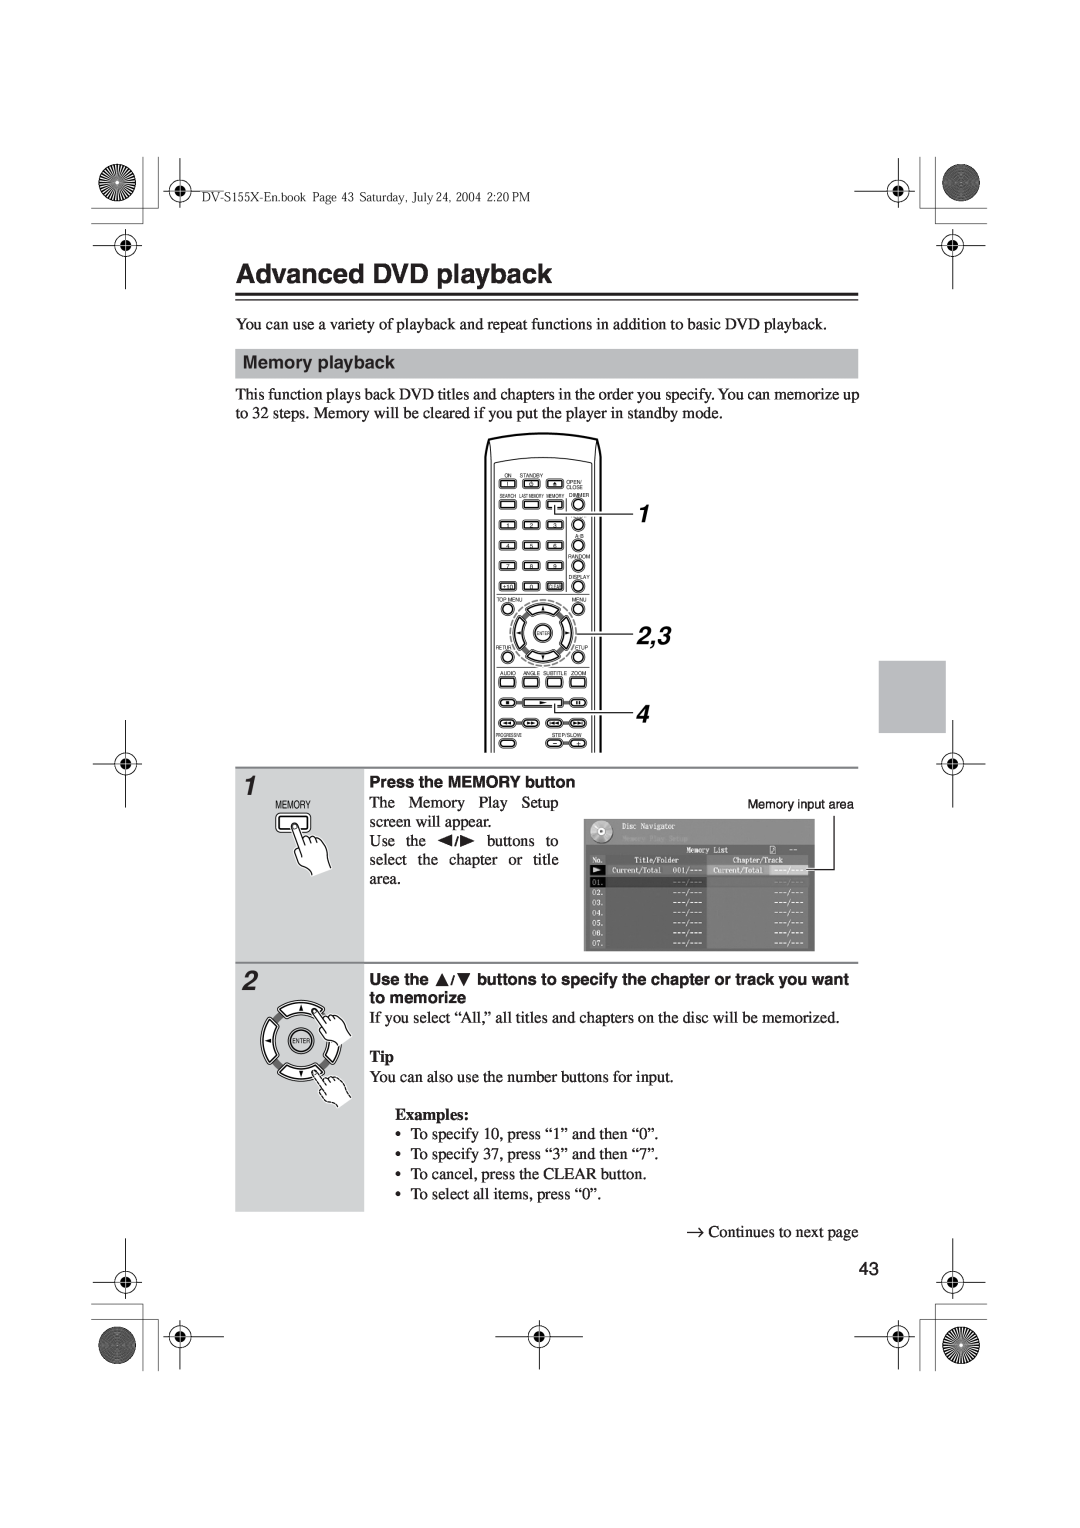 Onkyo ST-V10X, PR-155X Advanced DVD playback, 1 2,3, Memory playback, Press the MEMORY button, to memorize, Examples 